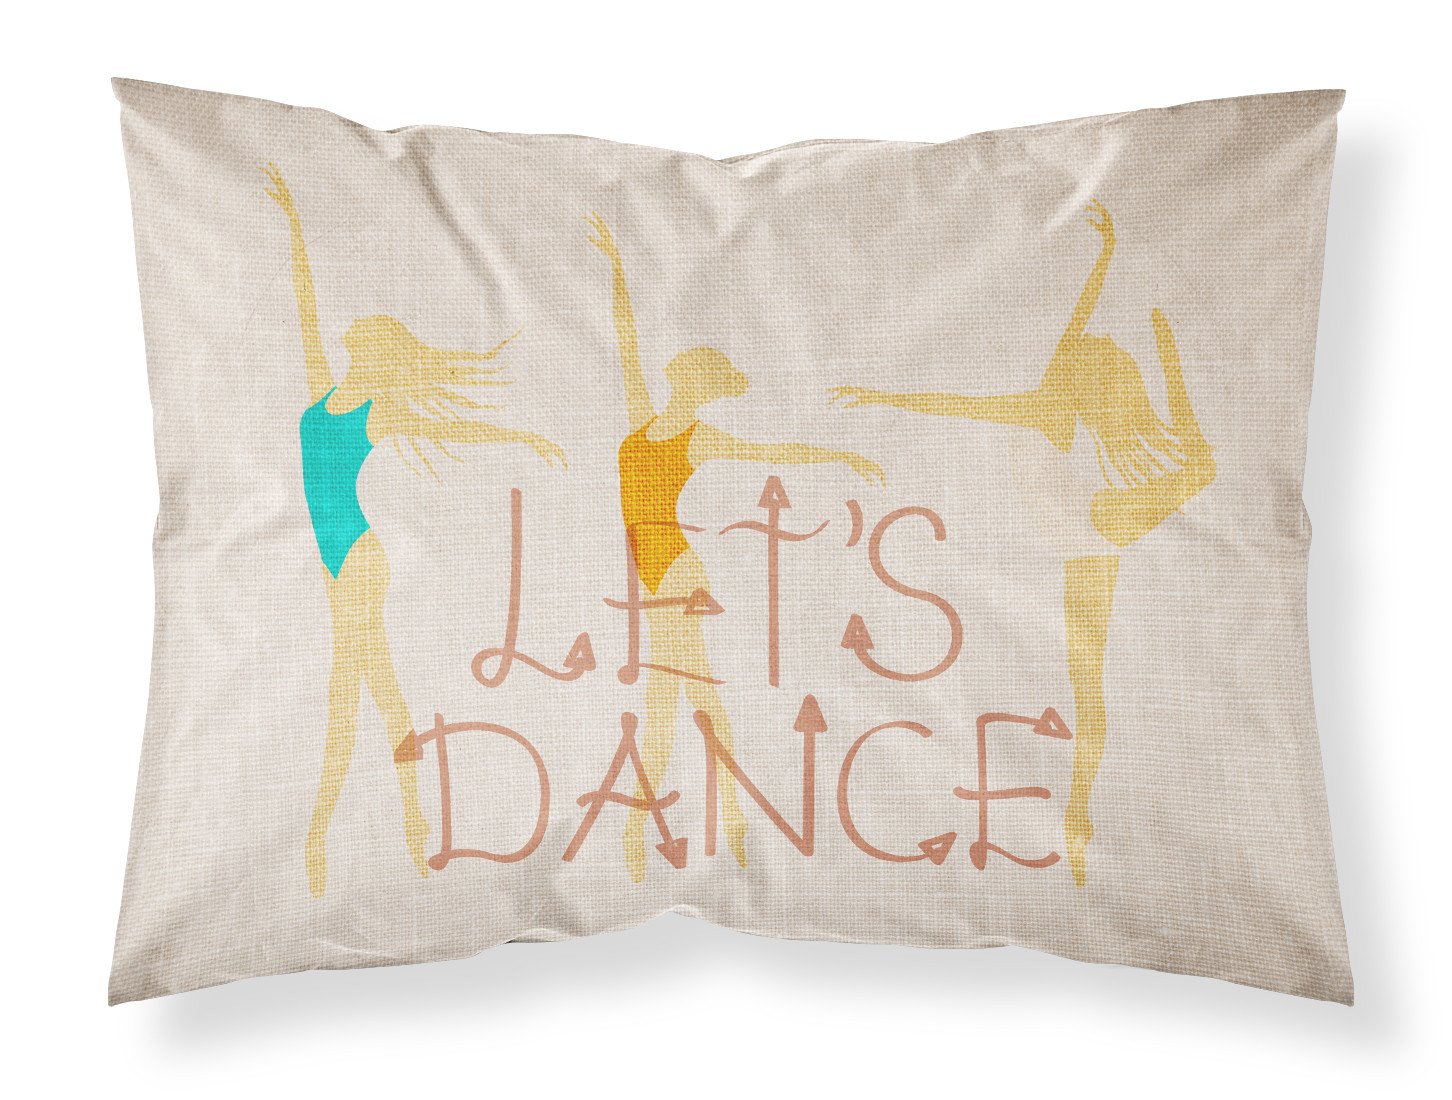 Let's Dance Linen Light Fabric Standard Pillowcase BB5376PILLOWCASE by Caroline's Treasures